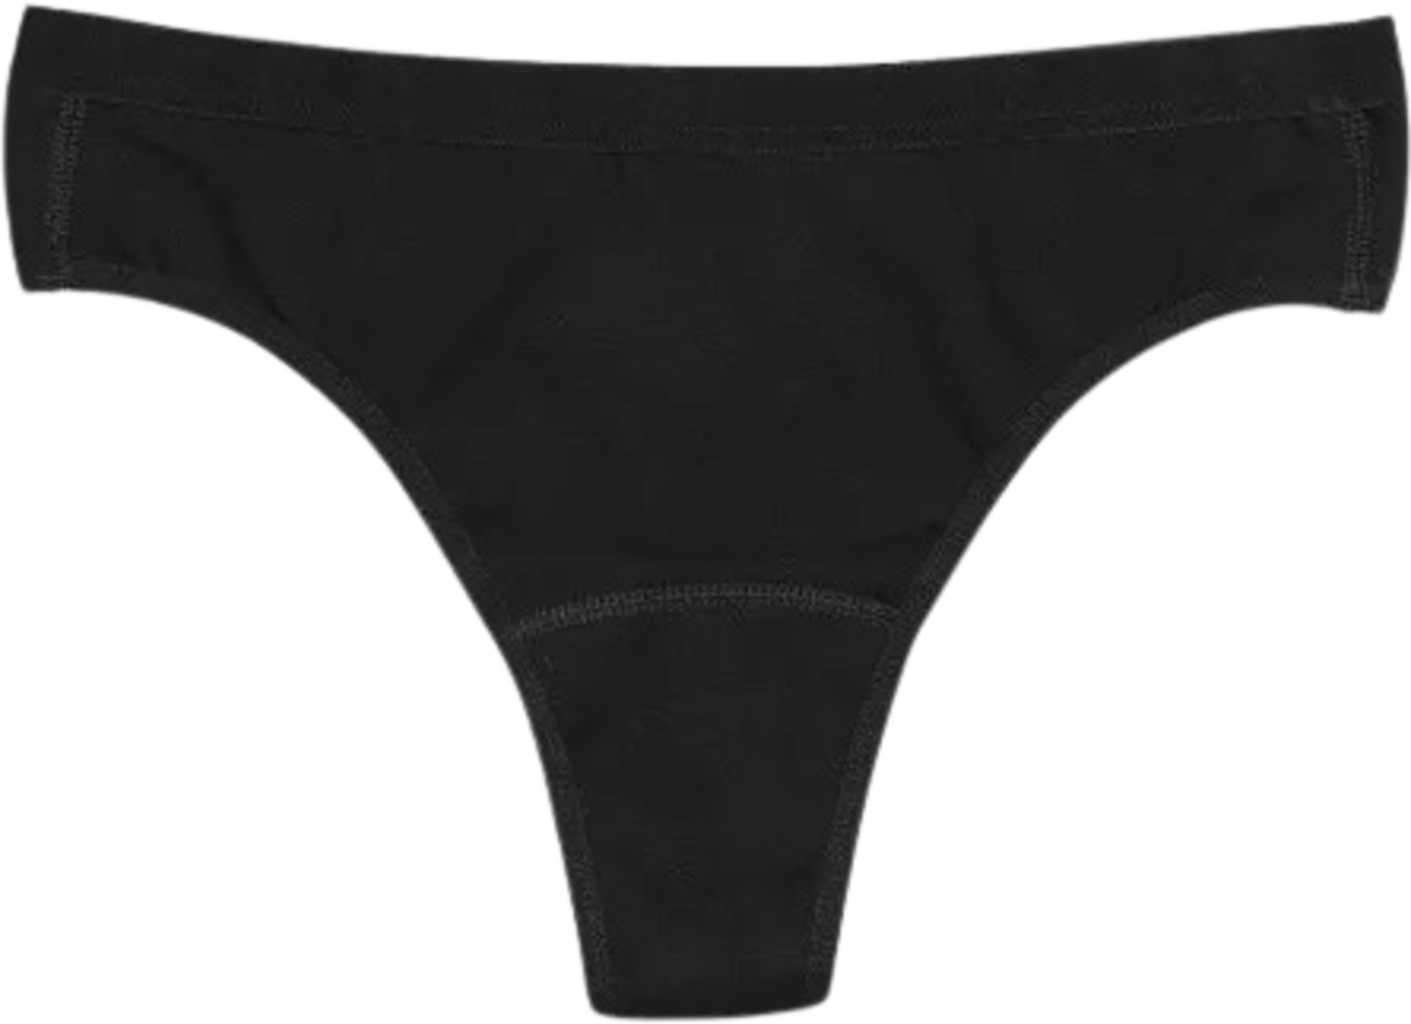 Leak-proof menstrual underwear women's bamboo fiber re-absorbing four-layer  breathable underwear women's menstrual underwear